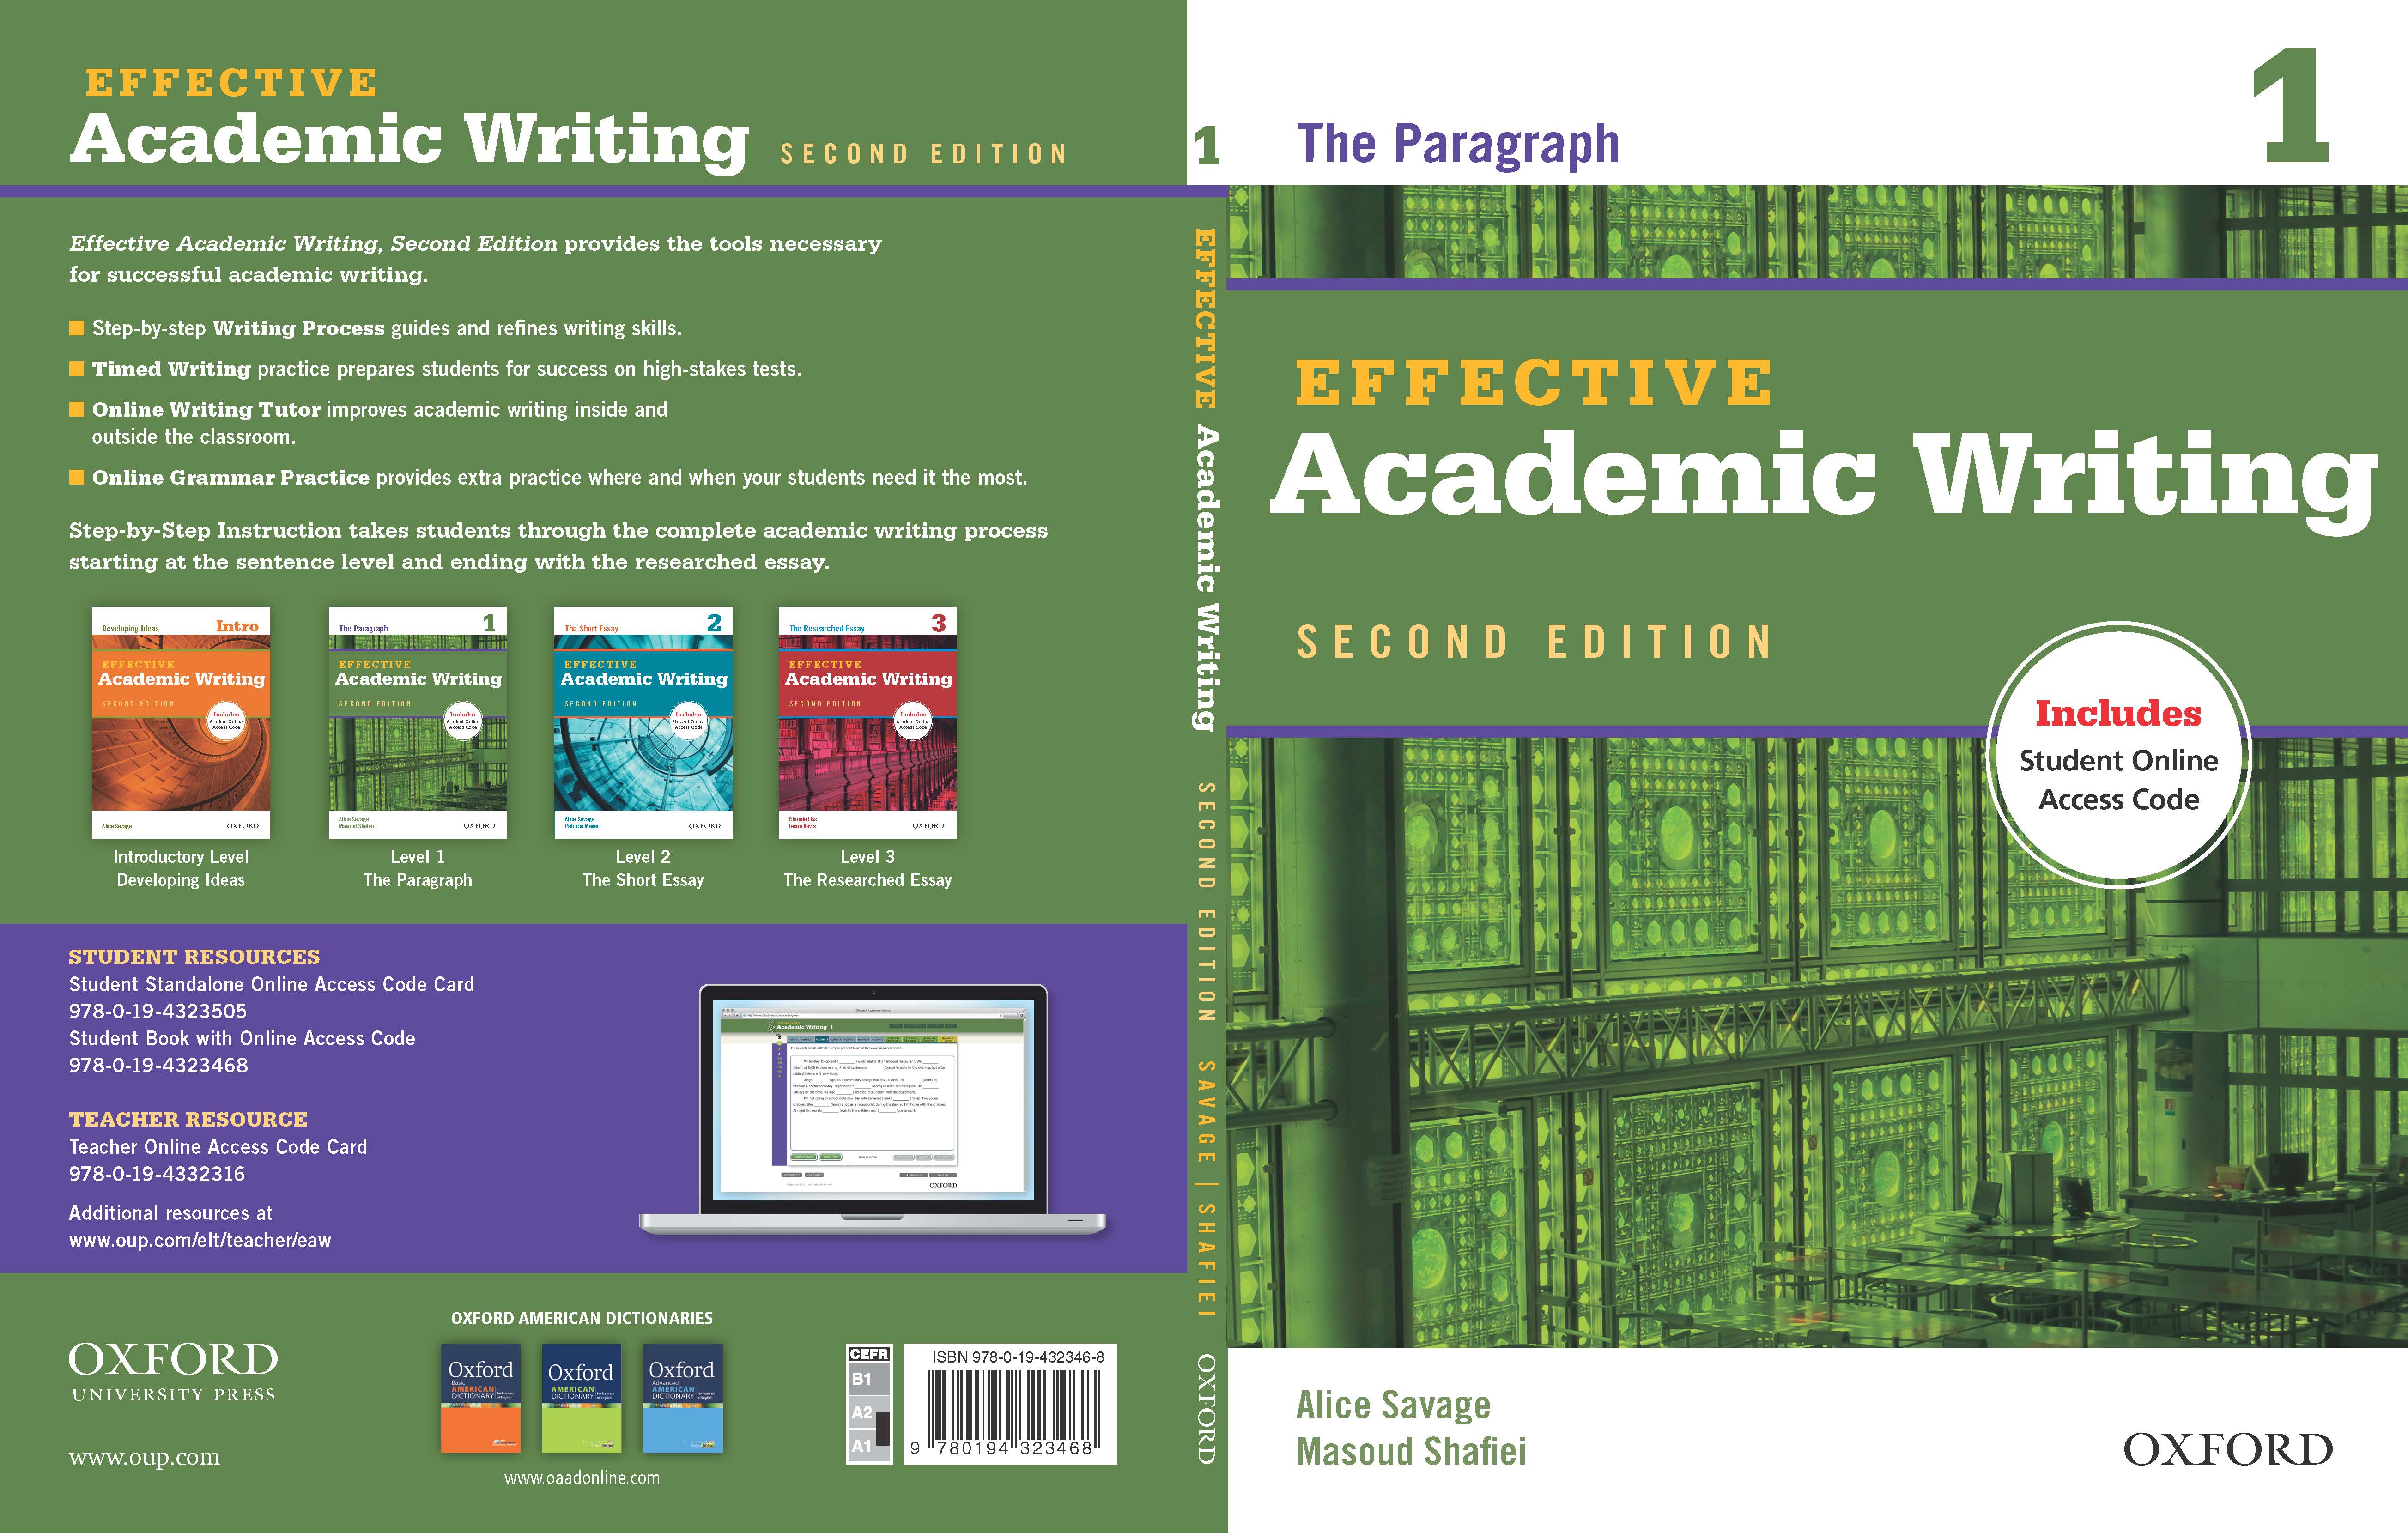 literature a world of writing 2nd edition pdf